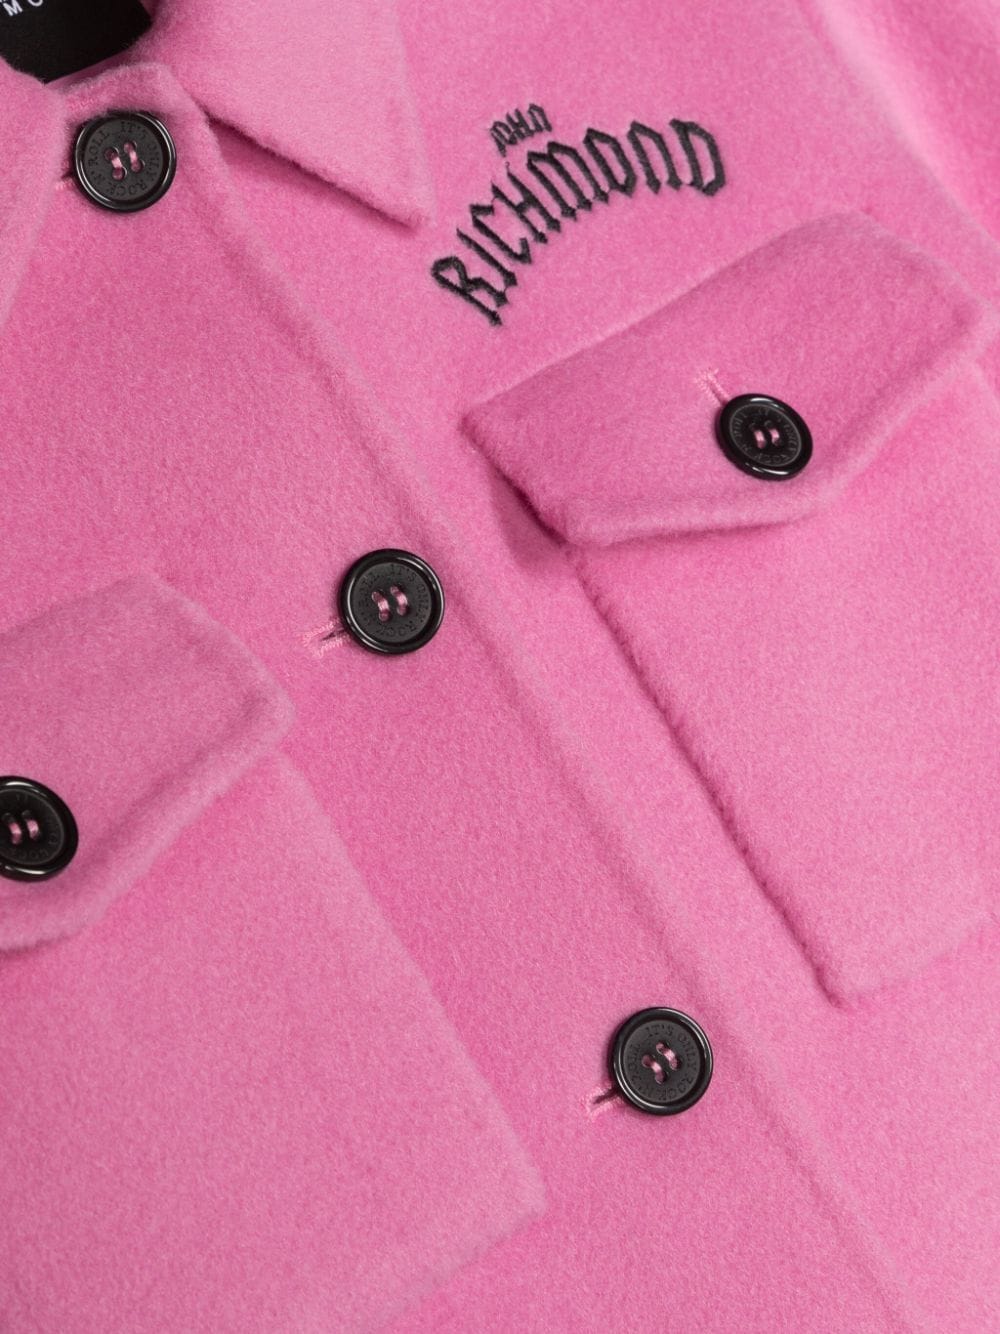 Veste fille rose pastel avec logo brodé